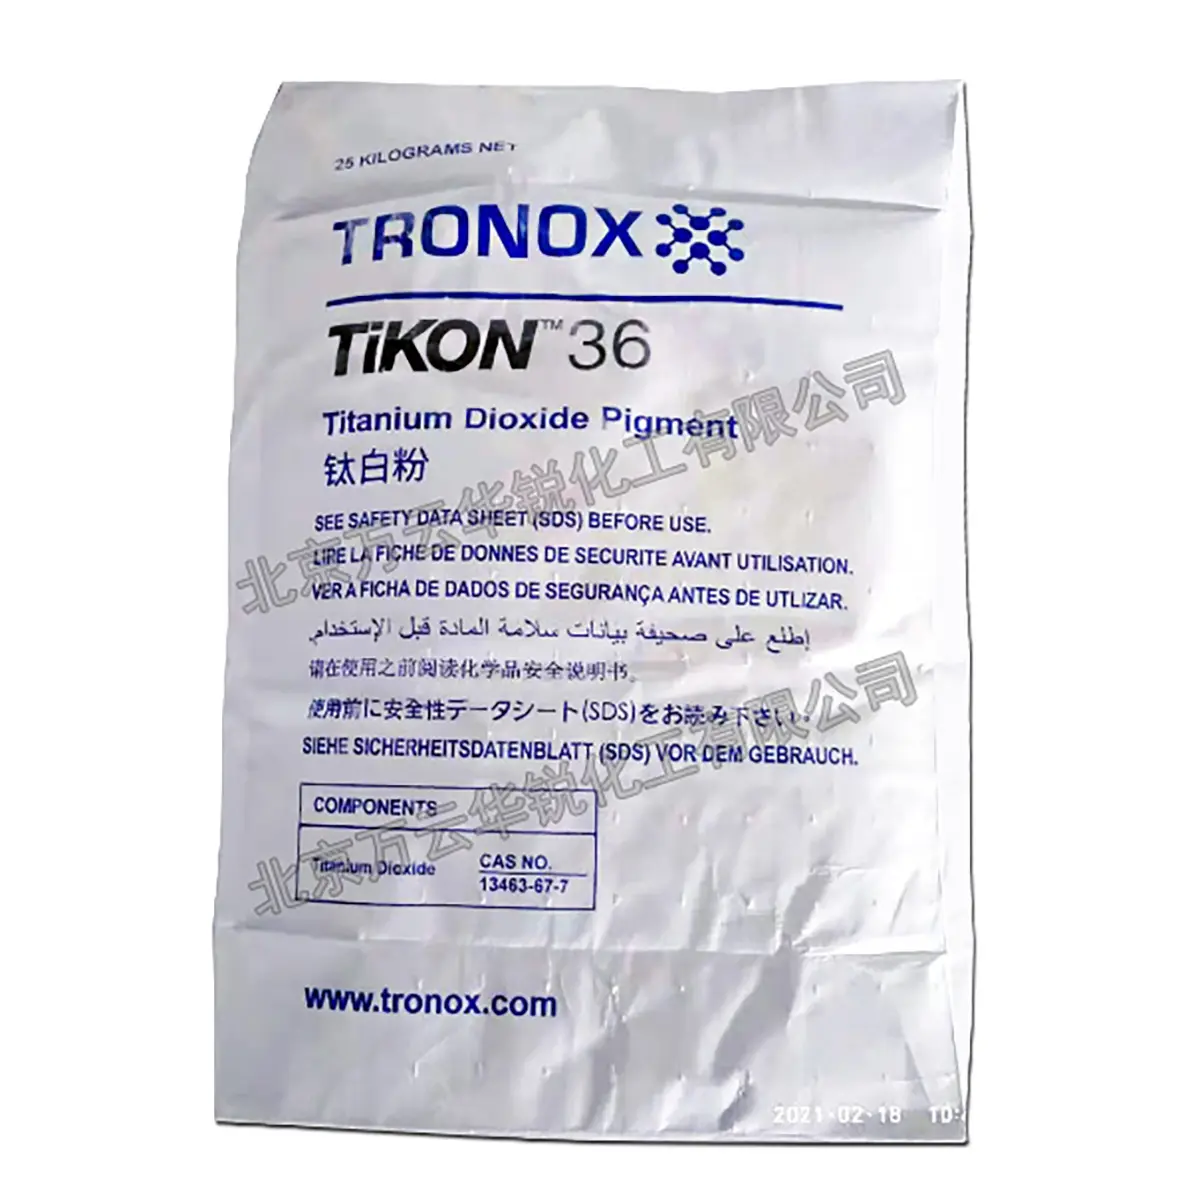 Dioxyde de titane TRONOX TiKON 36 TiO2 haute luminosité et blancheur